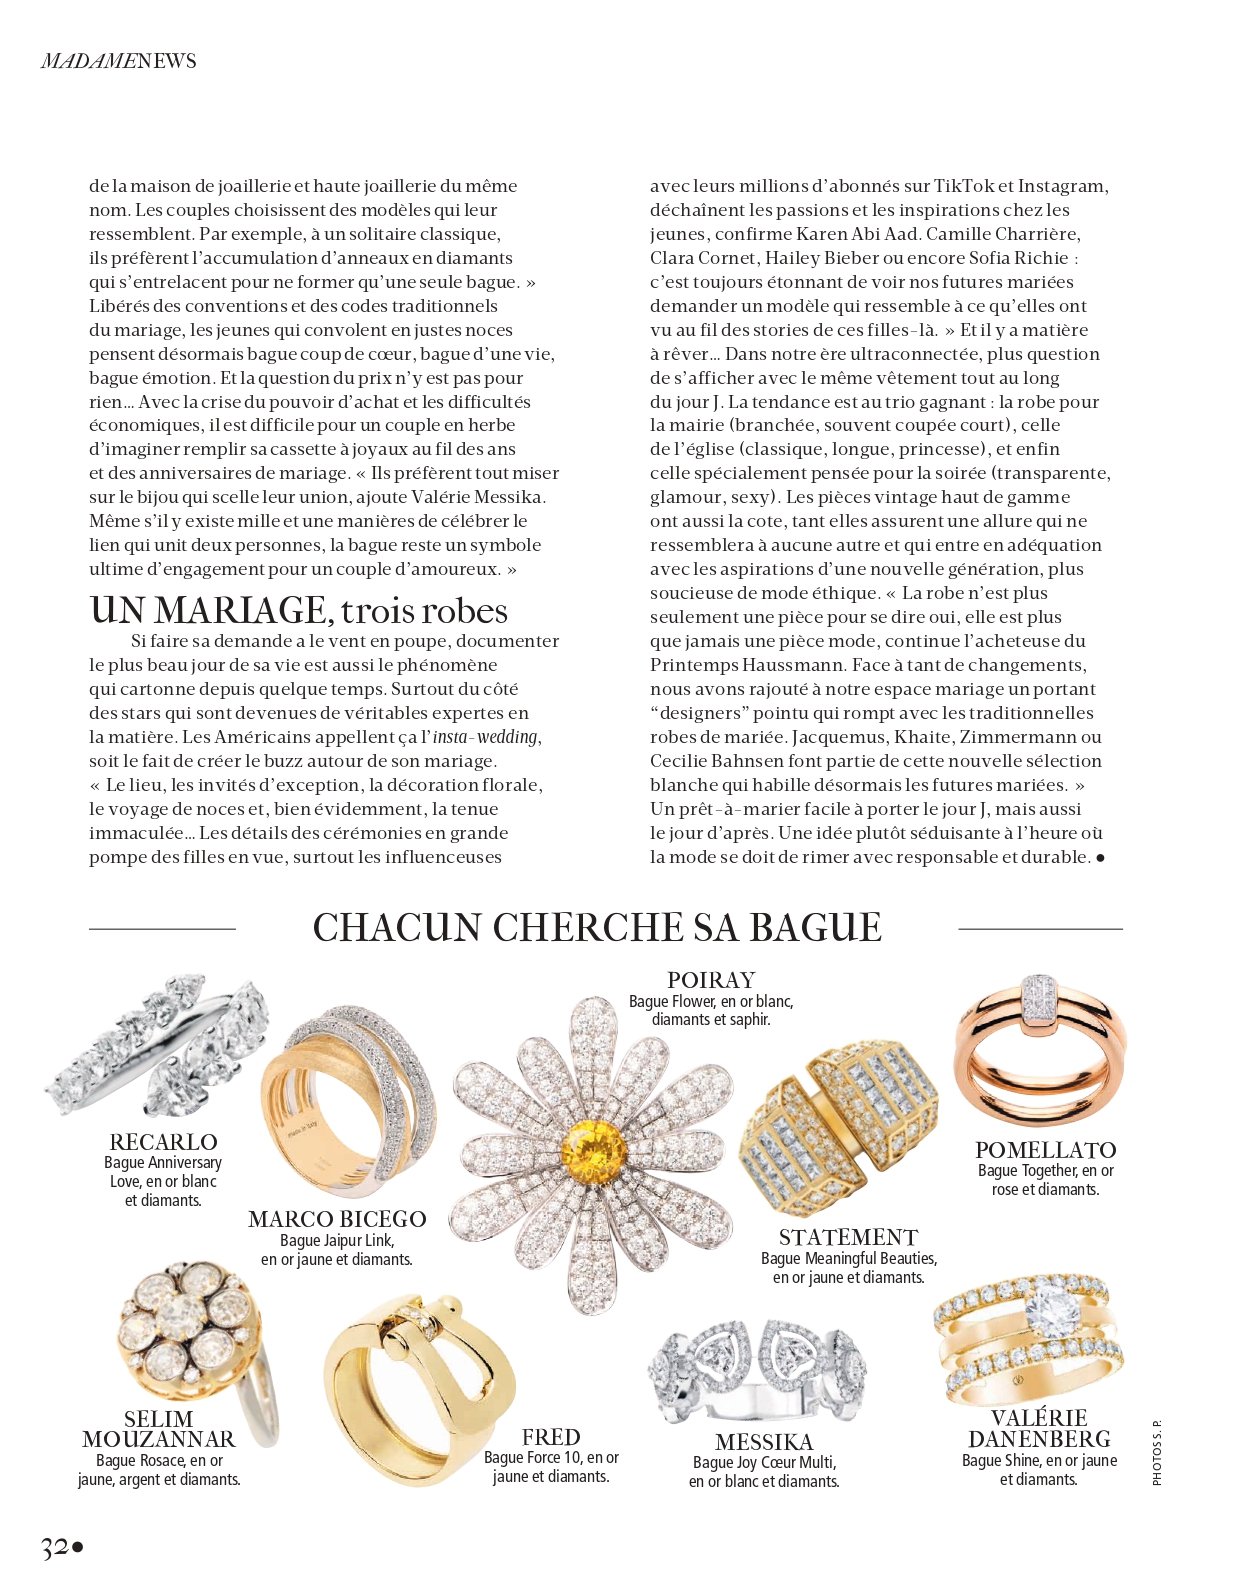 Article Valérie Danenberg x Madame Figaro - Bague or jaune diamants